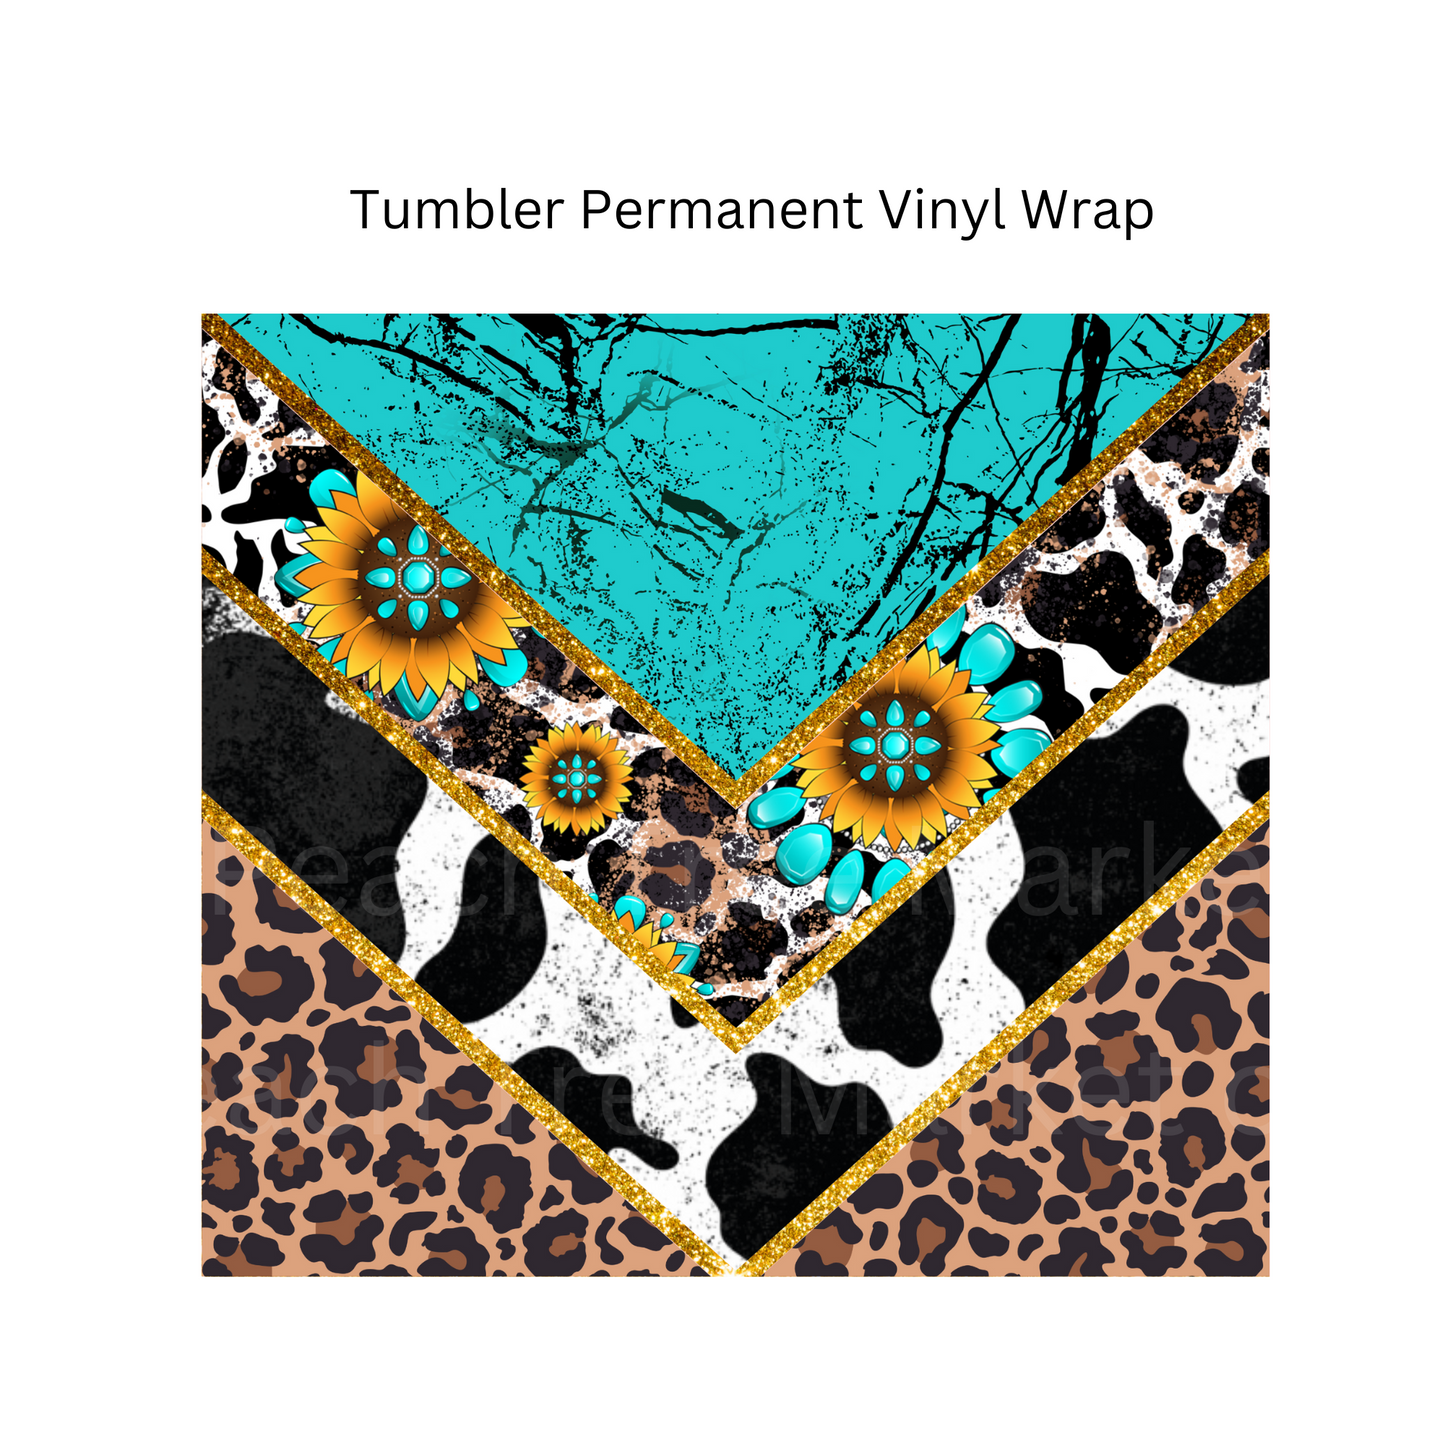 Turquoise Gem Tumbler Permanent Vinyl Wrap